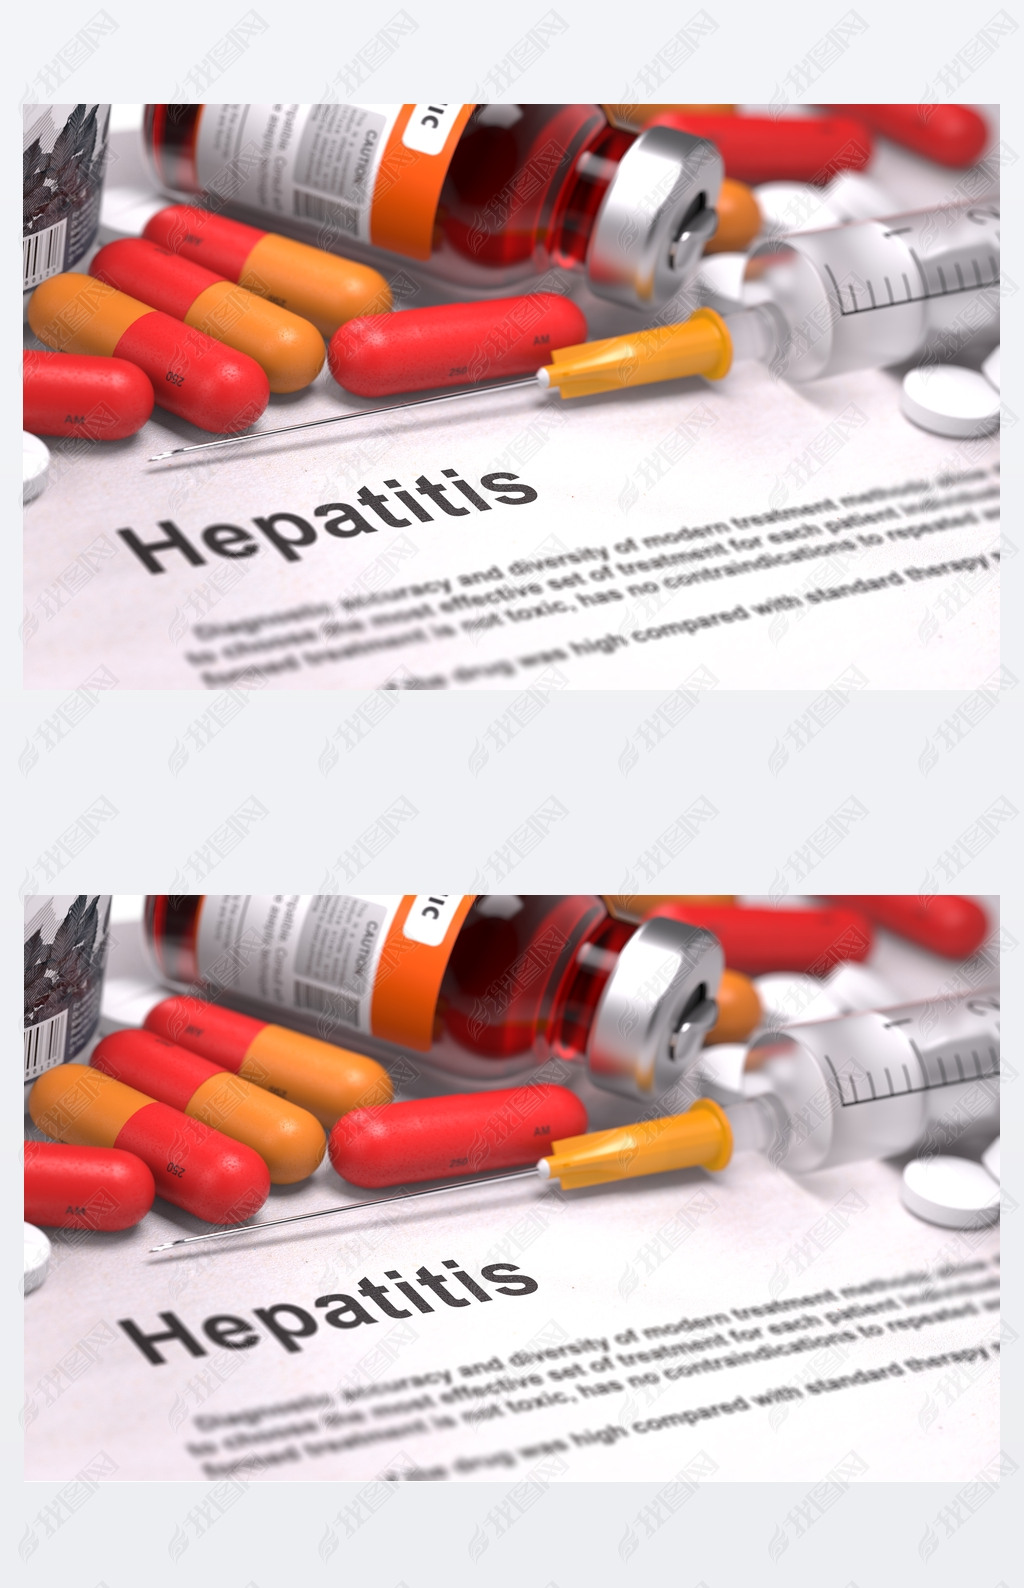 Hepatitis Diagnosis. Medical Concept.